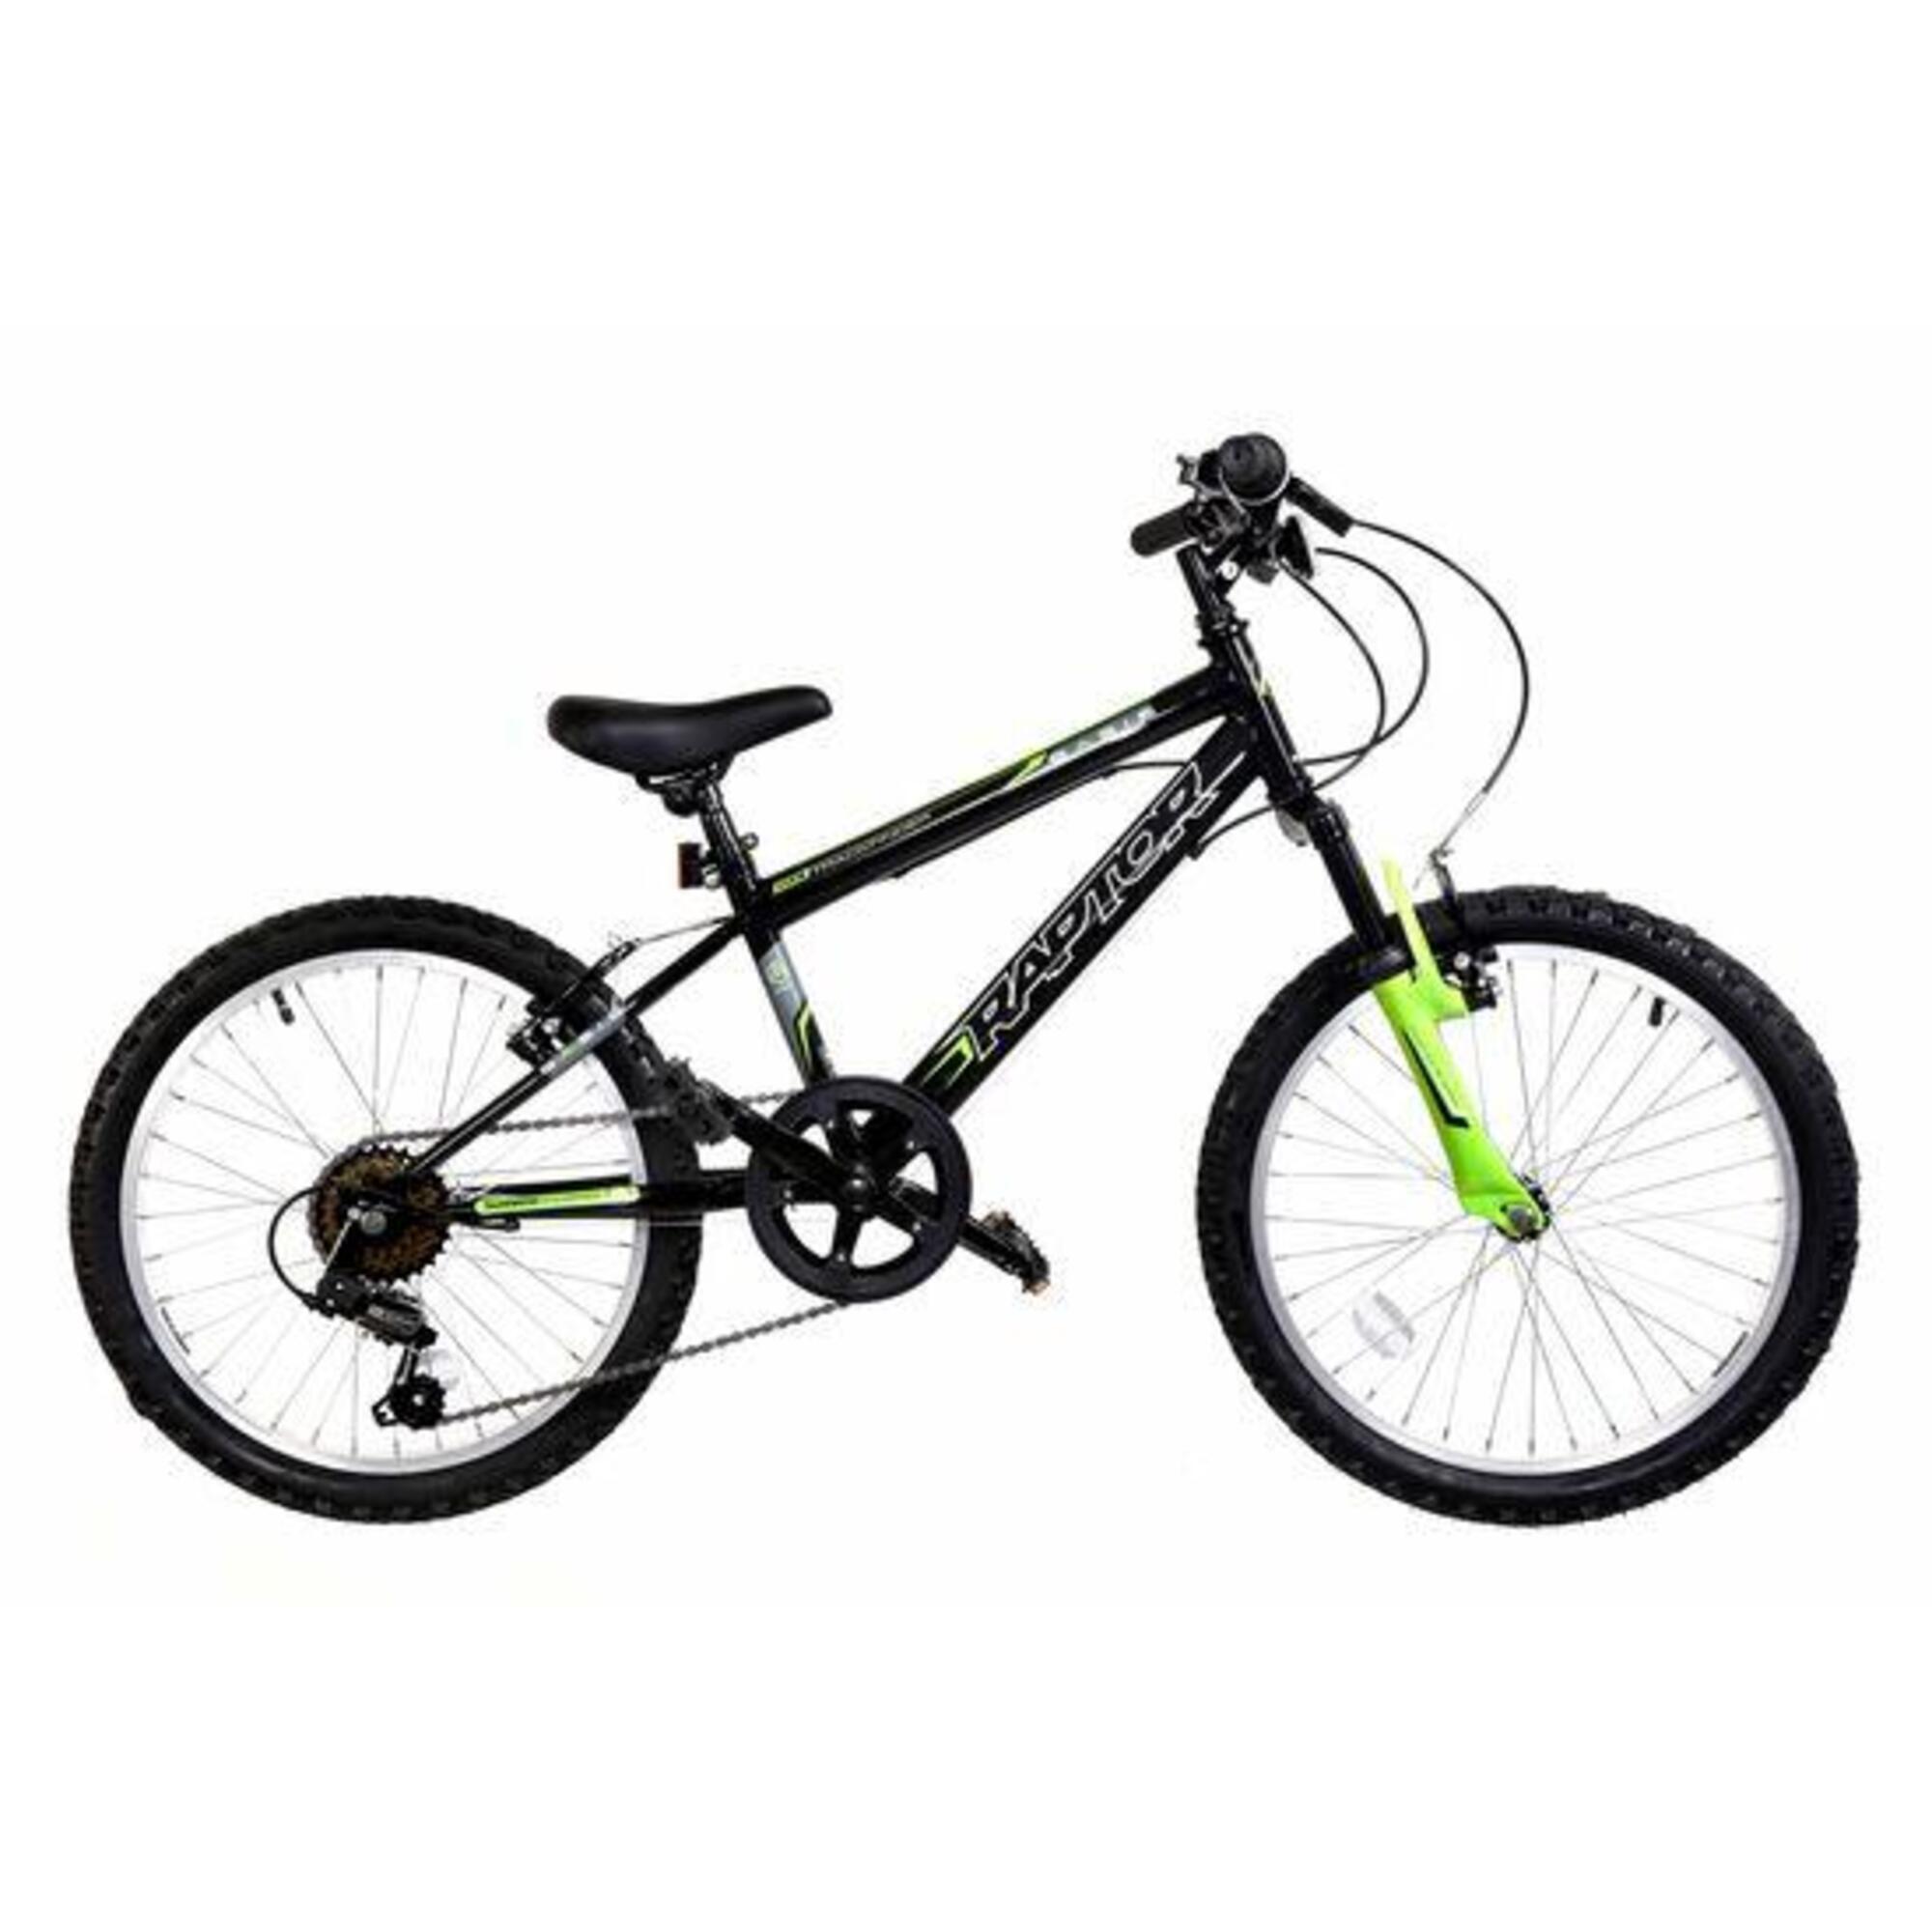 Basis Raptor Junior Hardtail Mountain Bike 20in Wheel - Gloss Black/Green 1/1